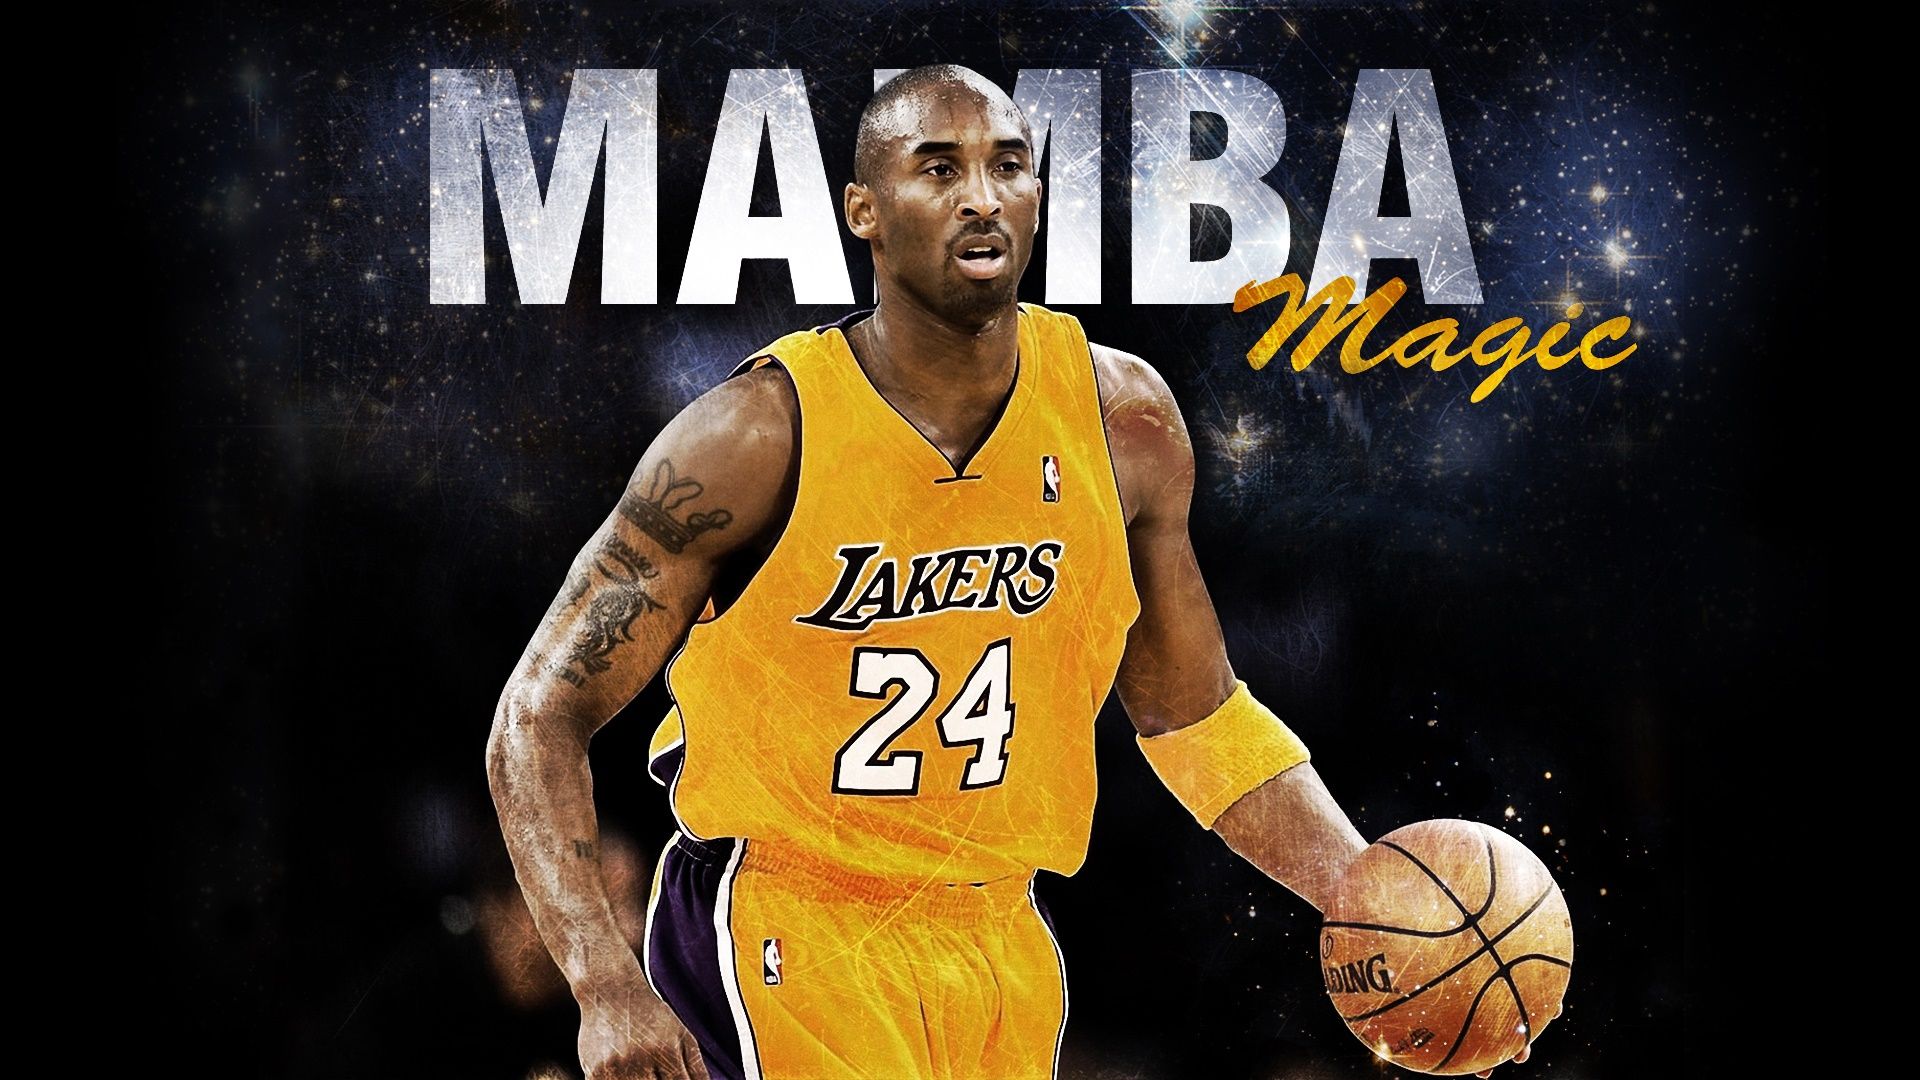 Wallpaper : Kobe Bryant, Los Angeles Lakers, NBA 3492x2454